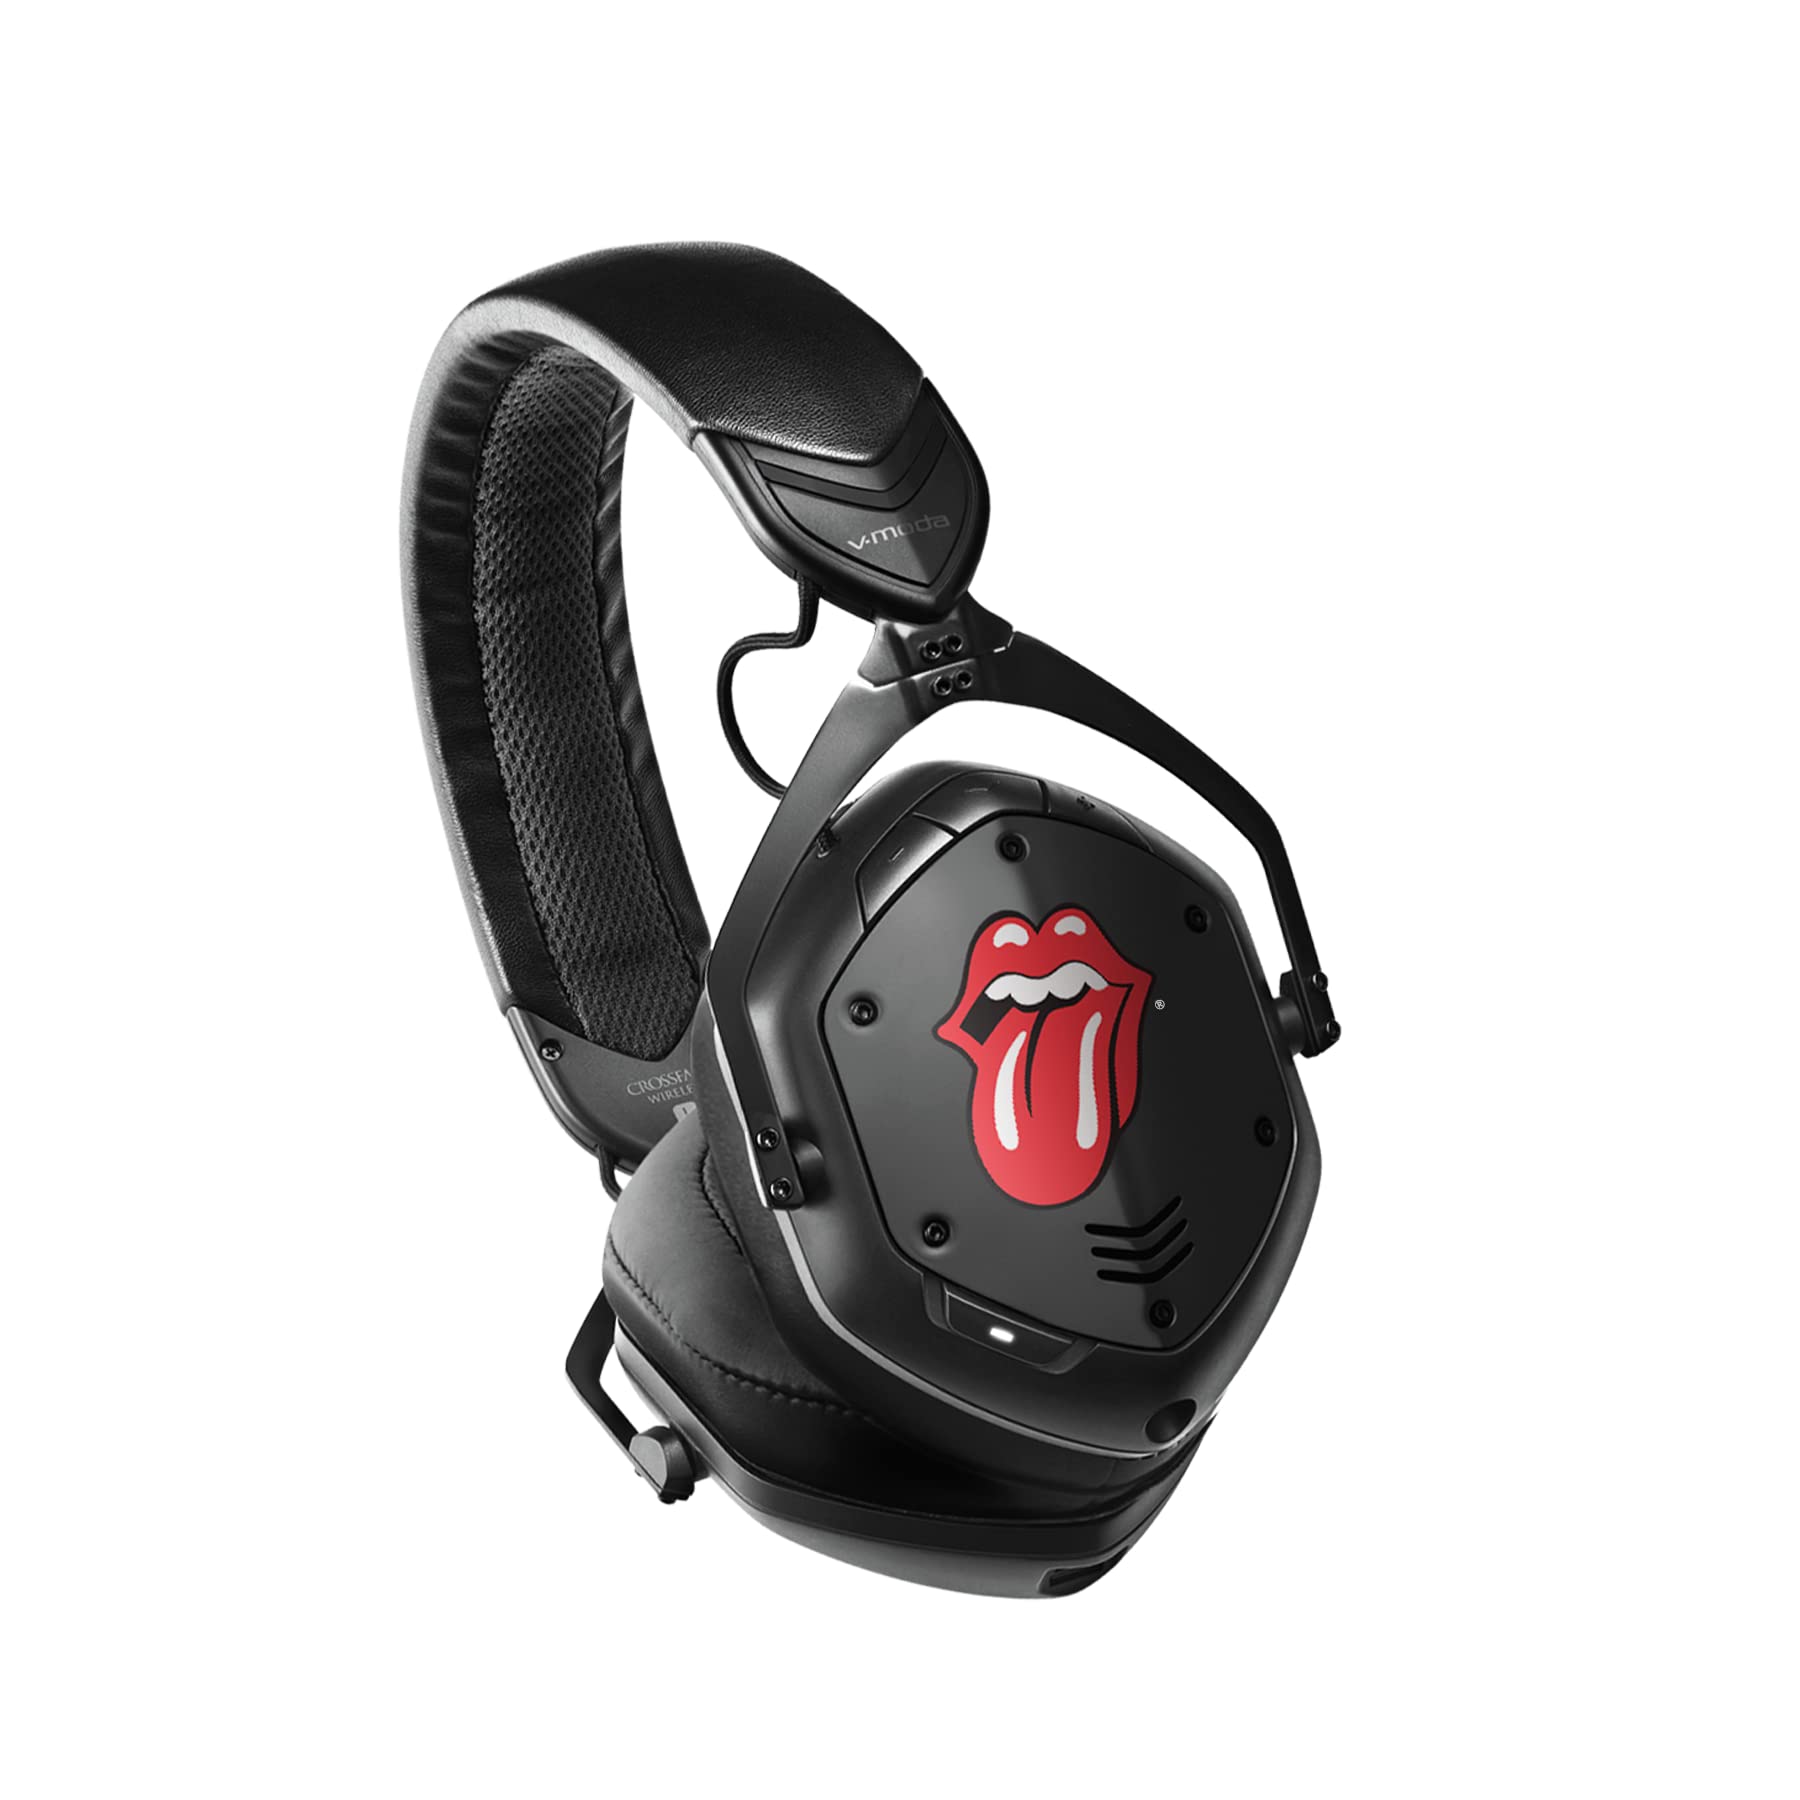 Rolling Stones x V-MODA Crossfade 2 Wireless Over-Ear Headphone in Black, Classic Licks (RSTONES-Classic)